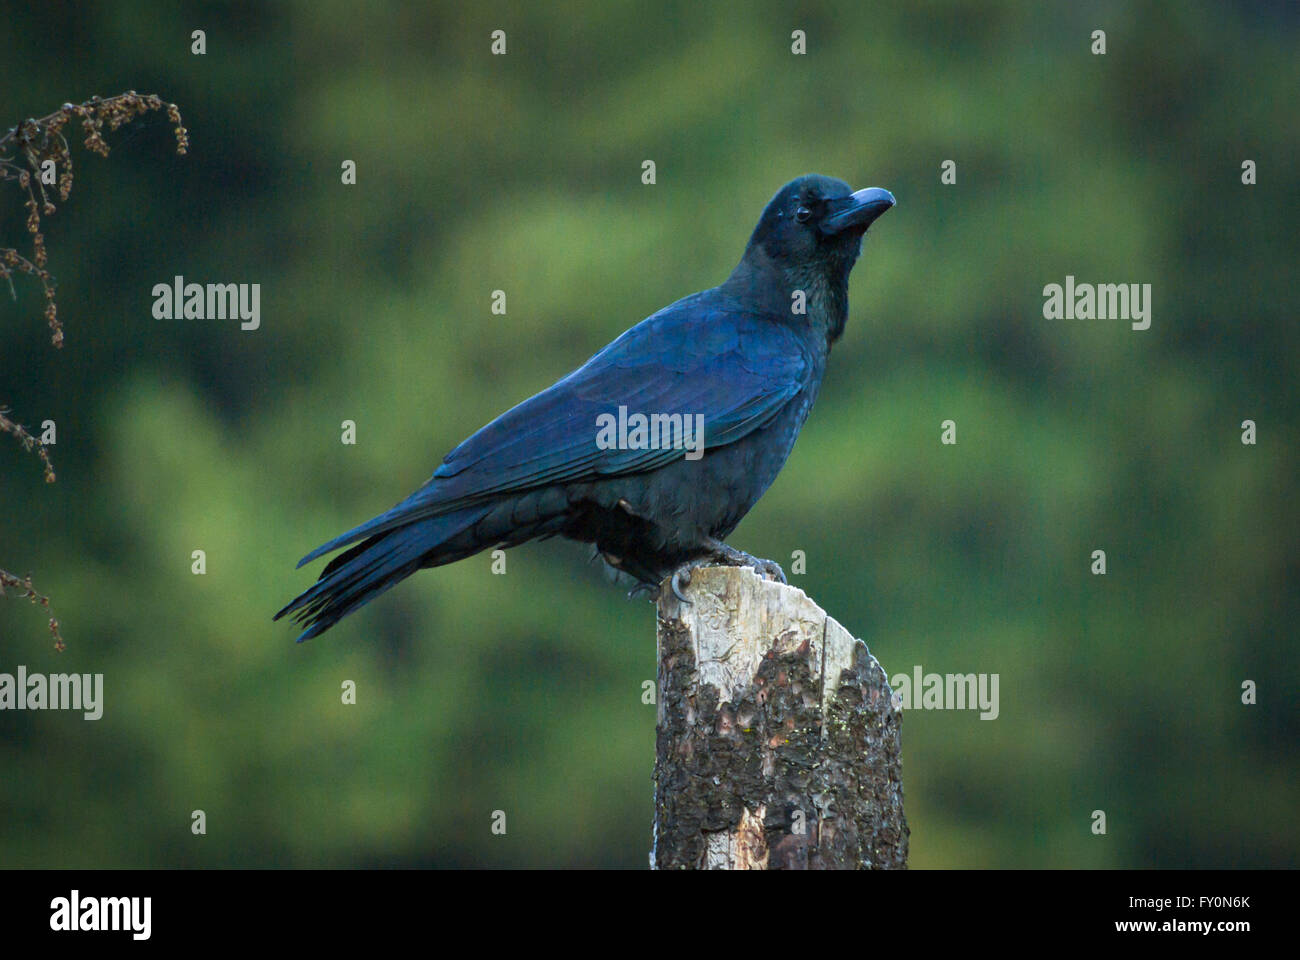 Large-billed Crow (Corvus macrorhynchos) perched on a pole in the Phobjikha Valley, Bhutan Stock Photo